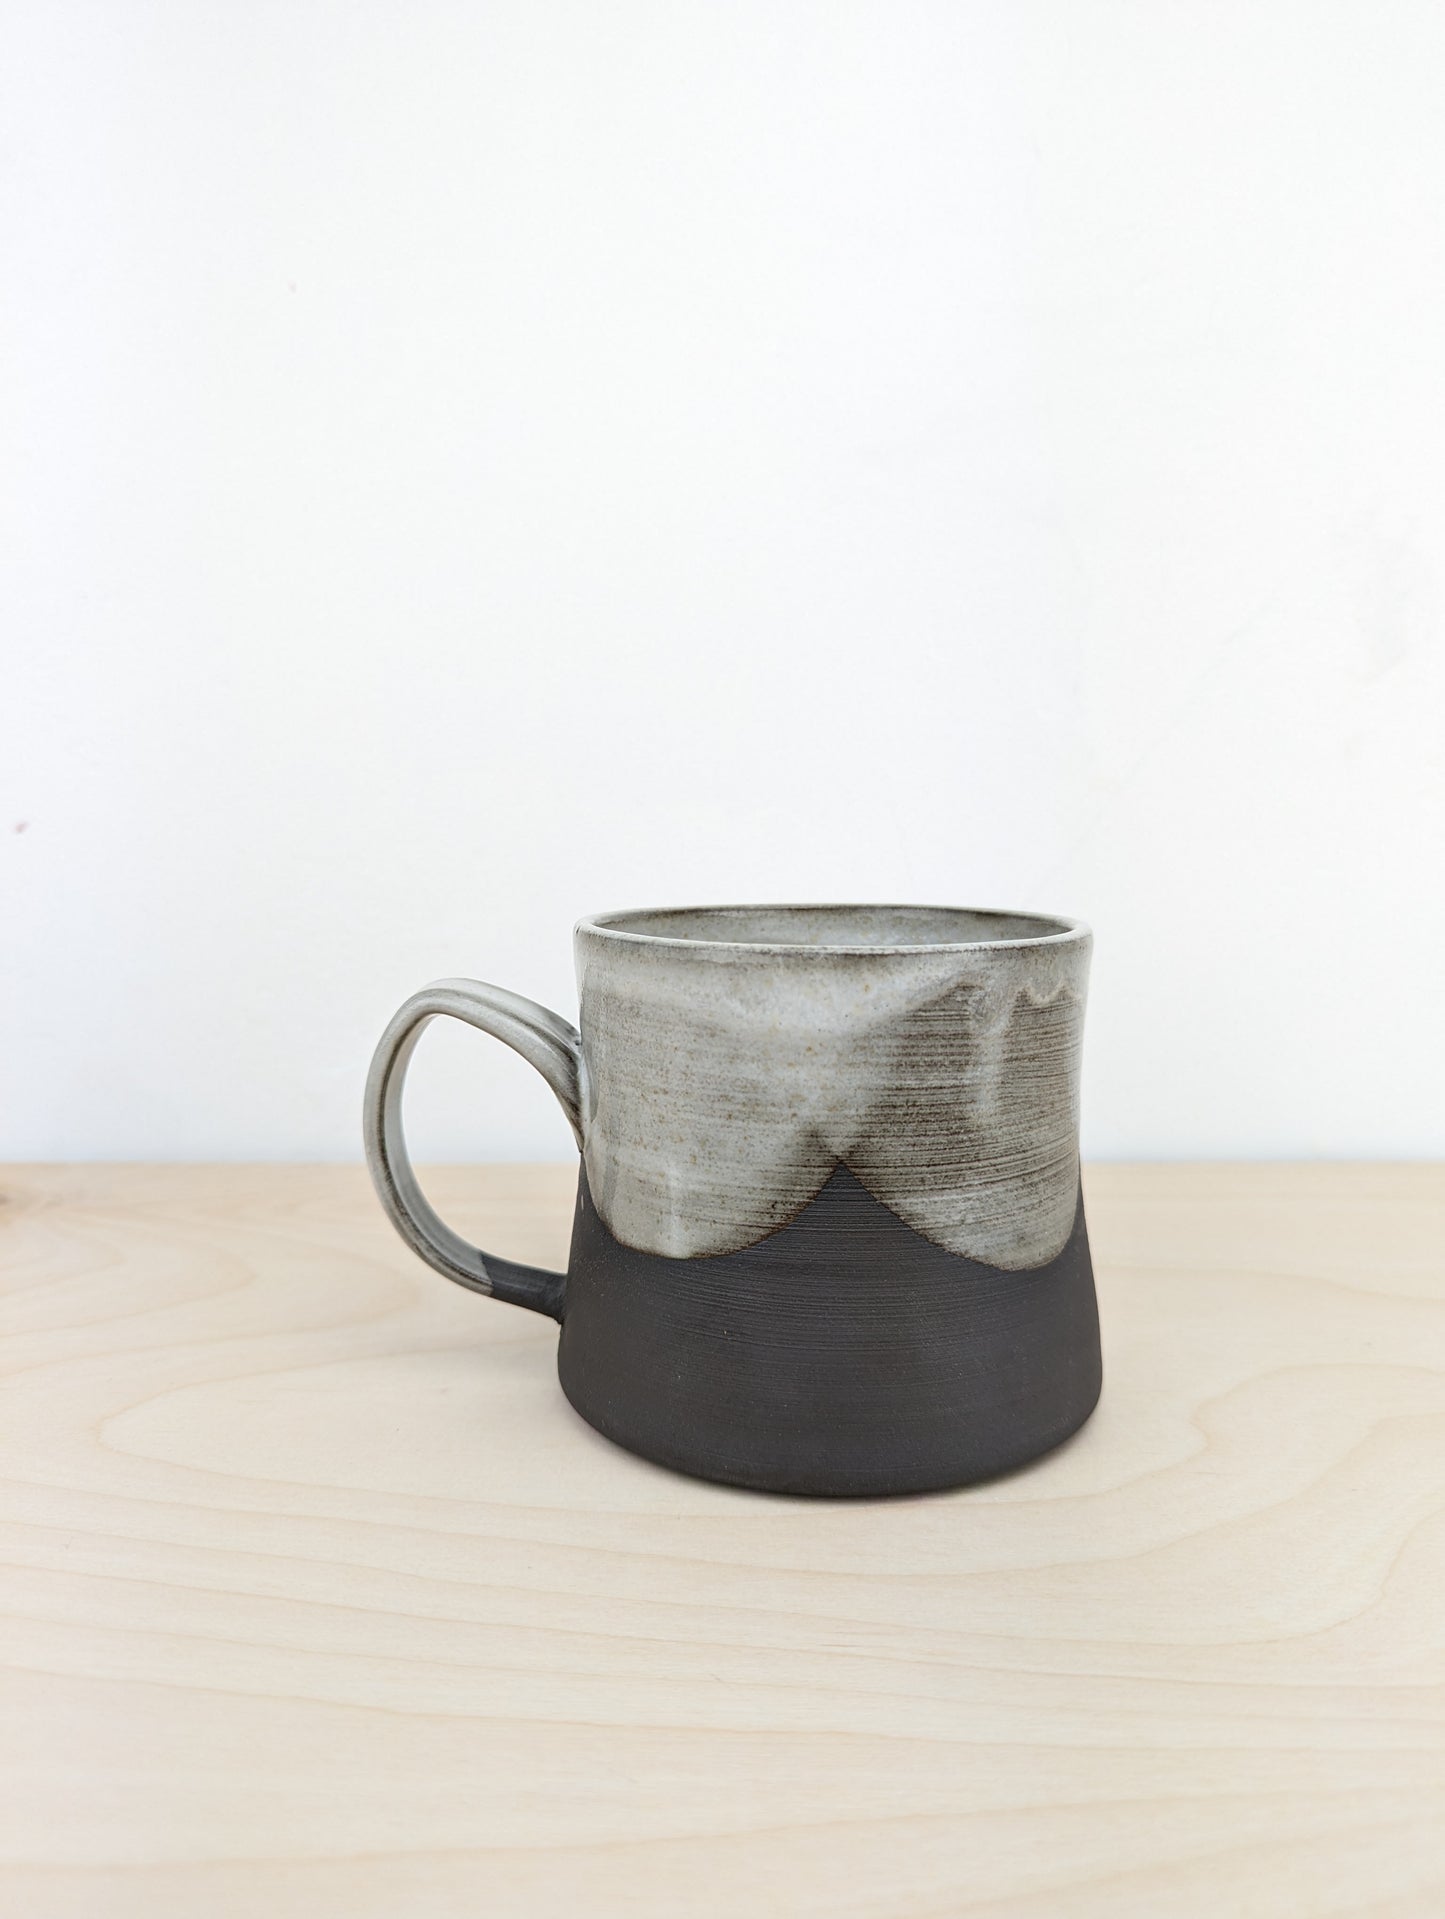 Deep Brown mug with White Curves